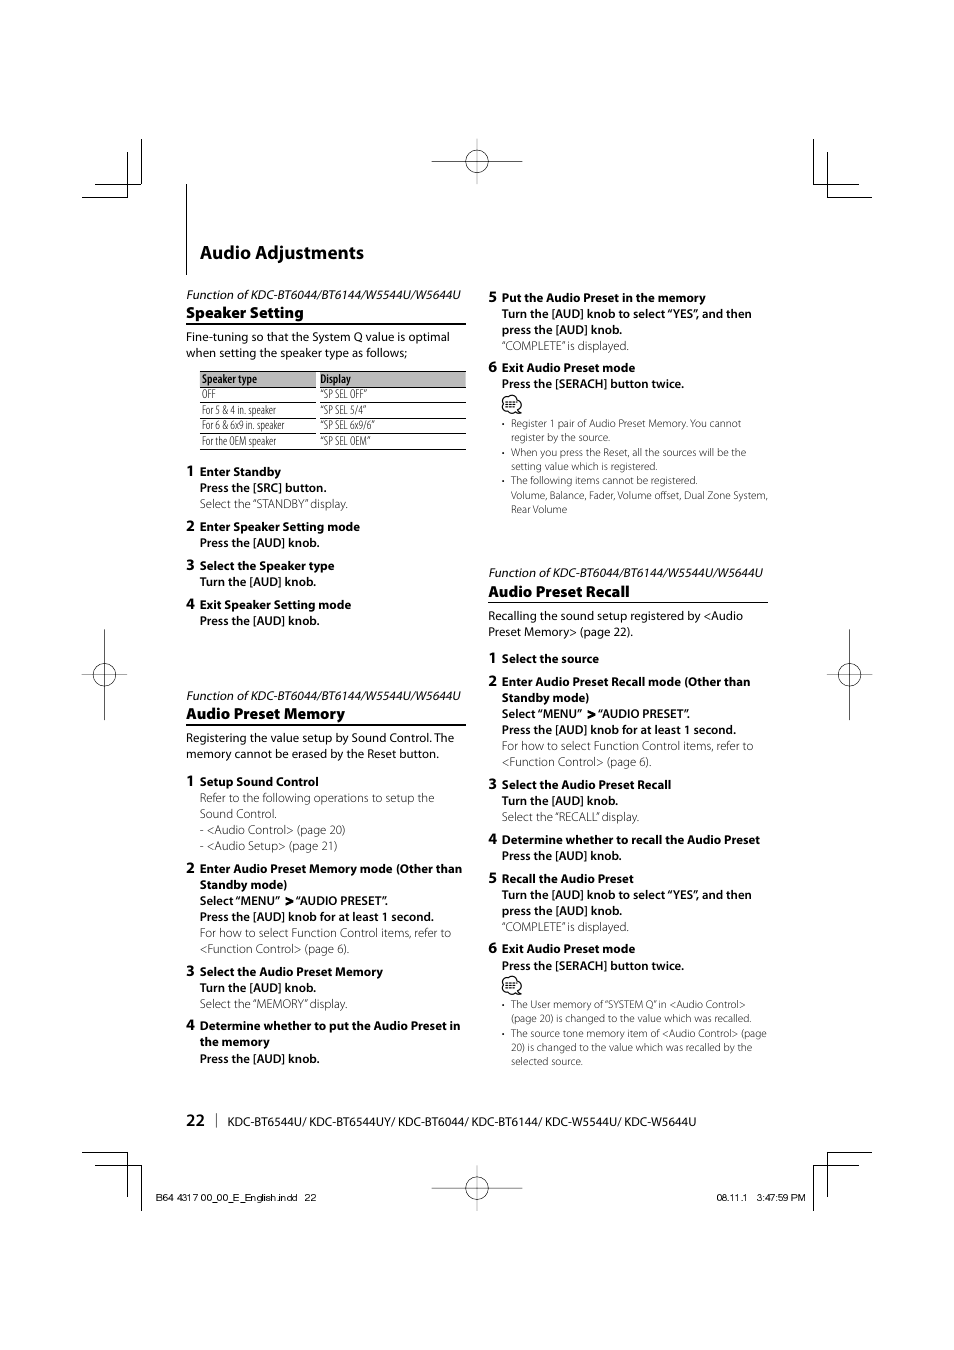 Audio adjustments | Kenwood KDC-BT6544U User Manual | Page 22 / 48 |  Original mode